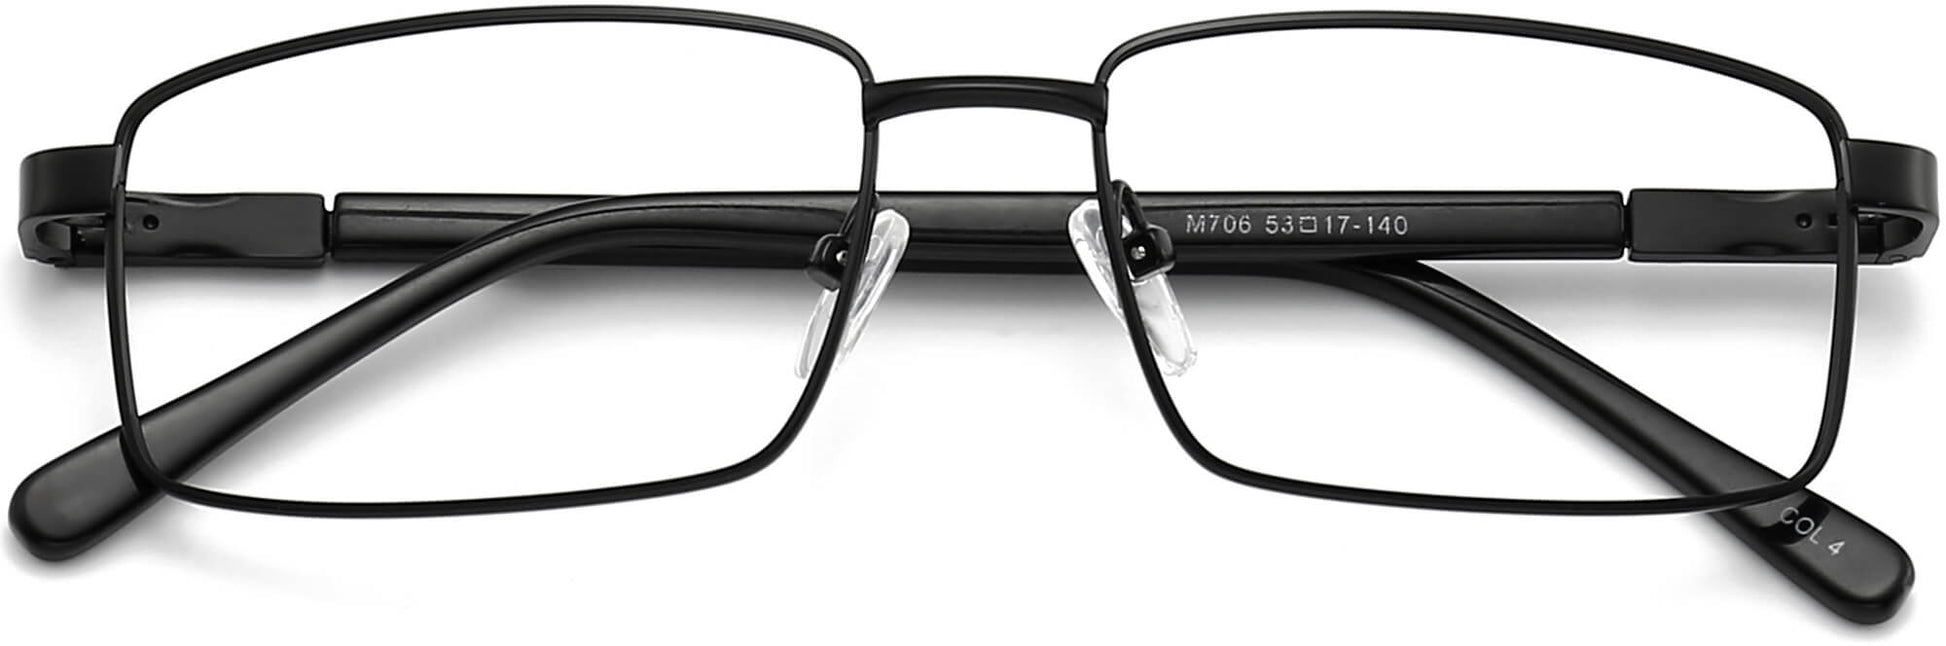 Yaretzi Square Black Eyeglasses from ANRRI, closed view